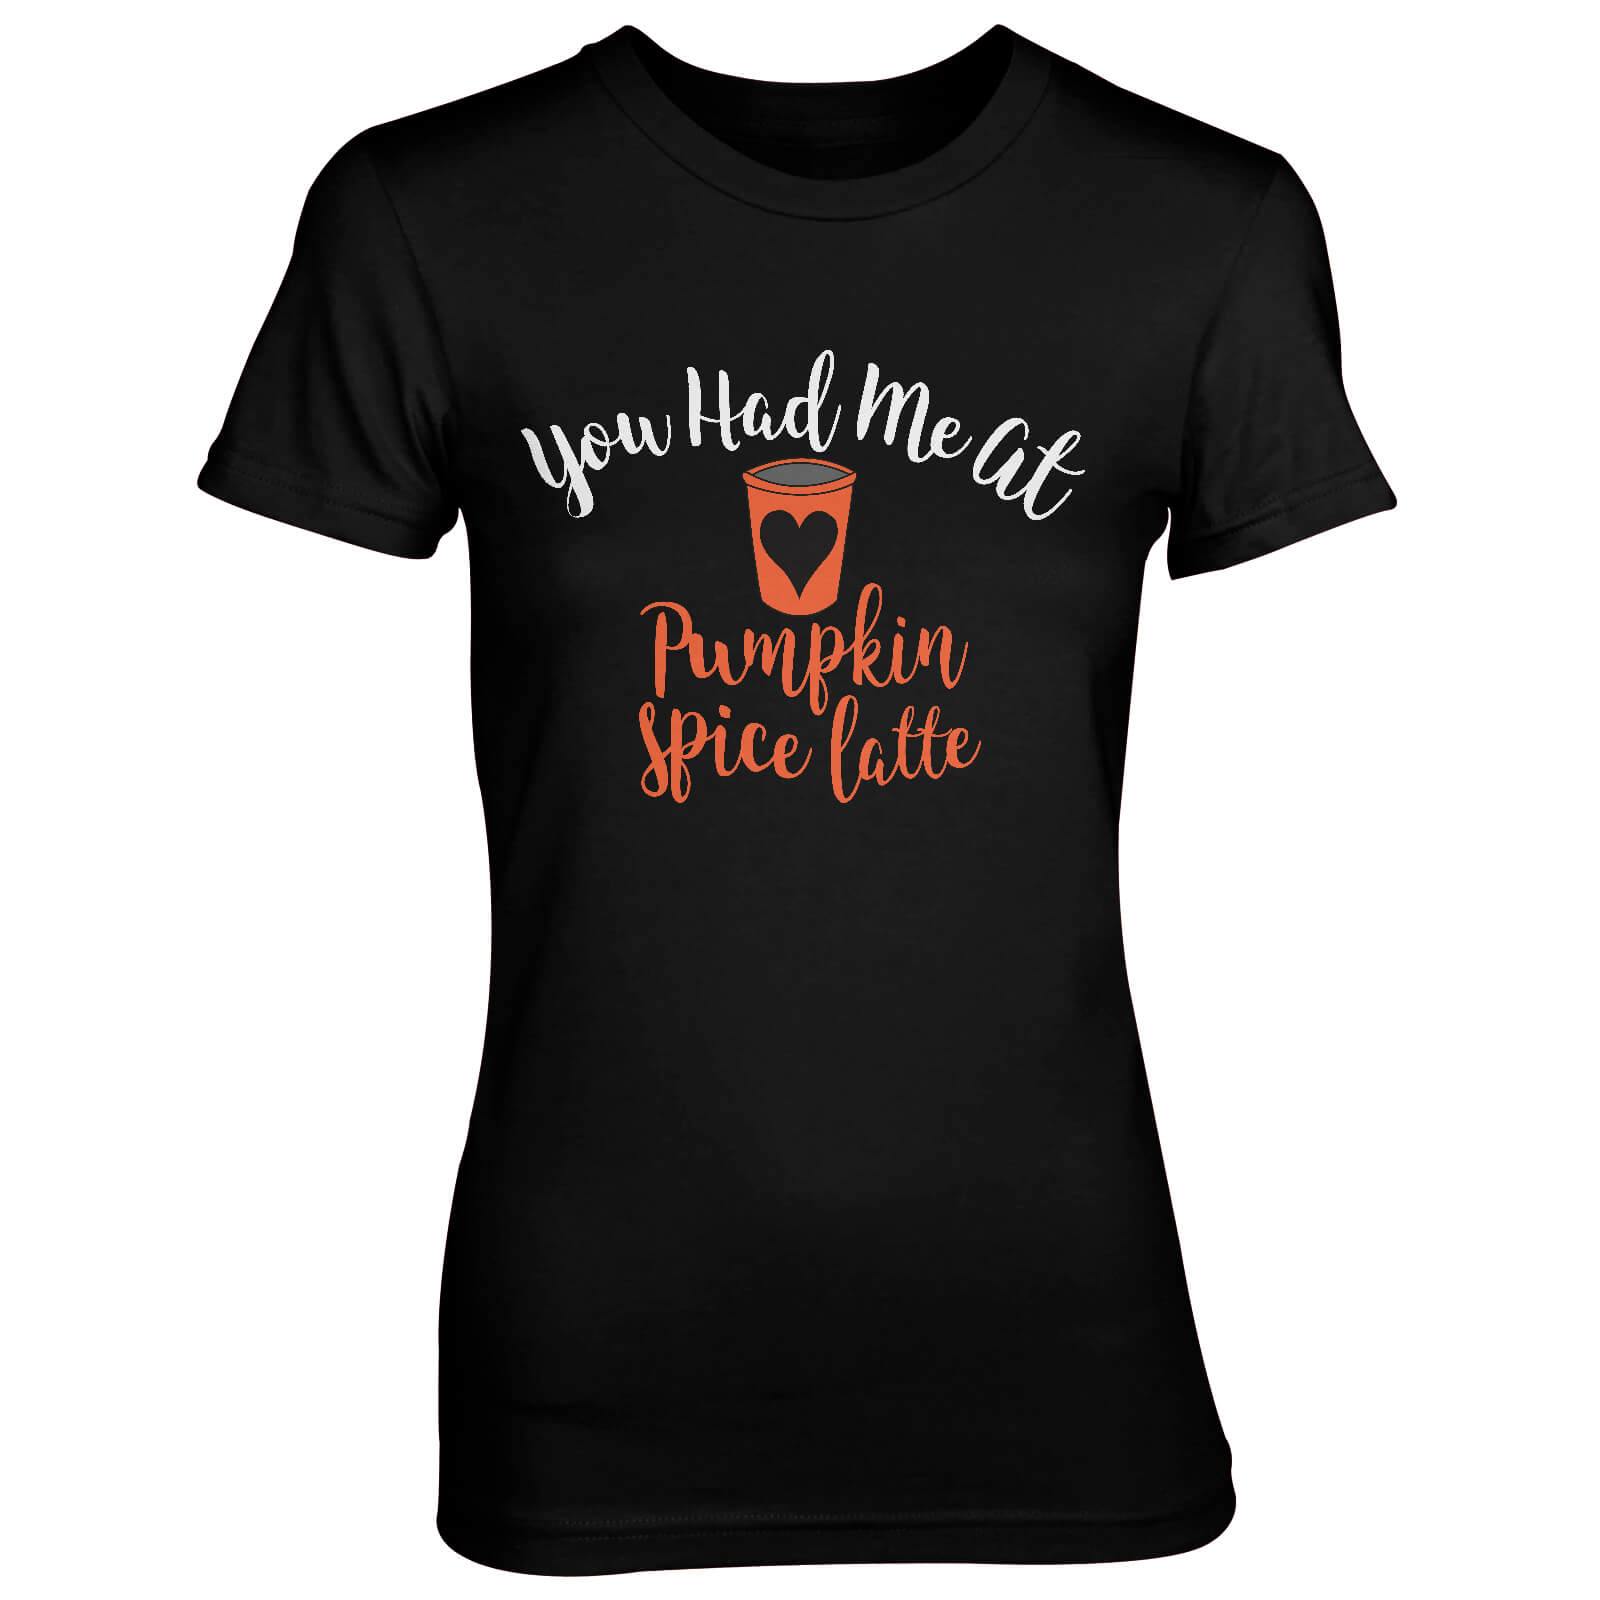 You Had Me At Pumpkin Spice Latte Women's Black T-Shirt - S - Black